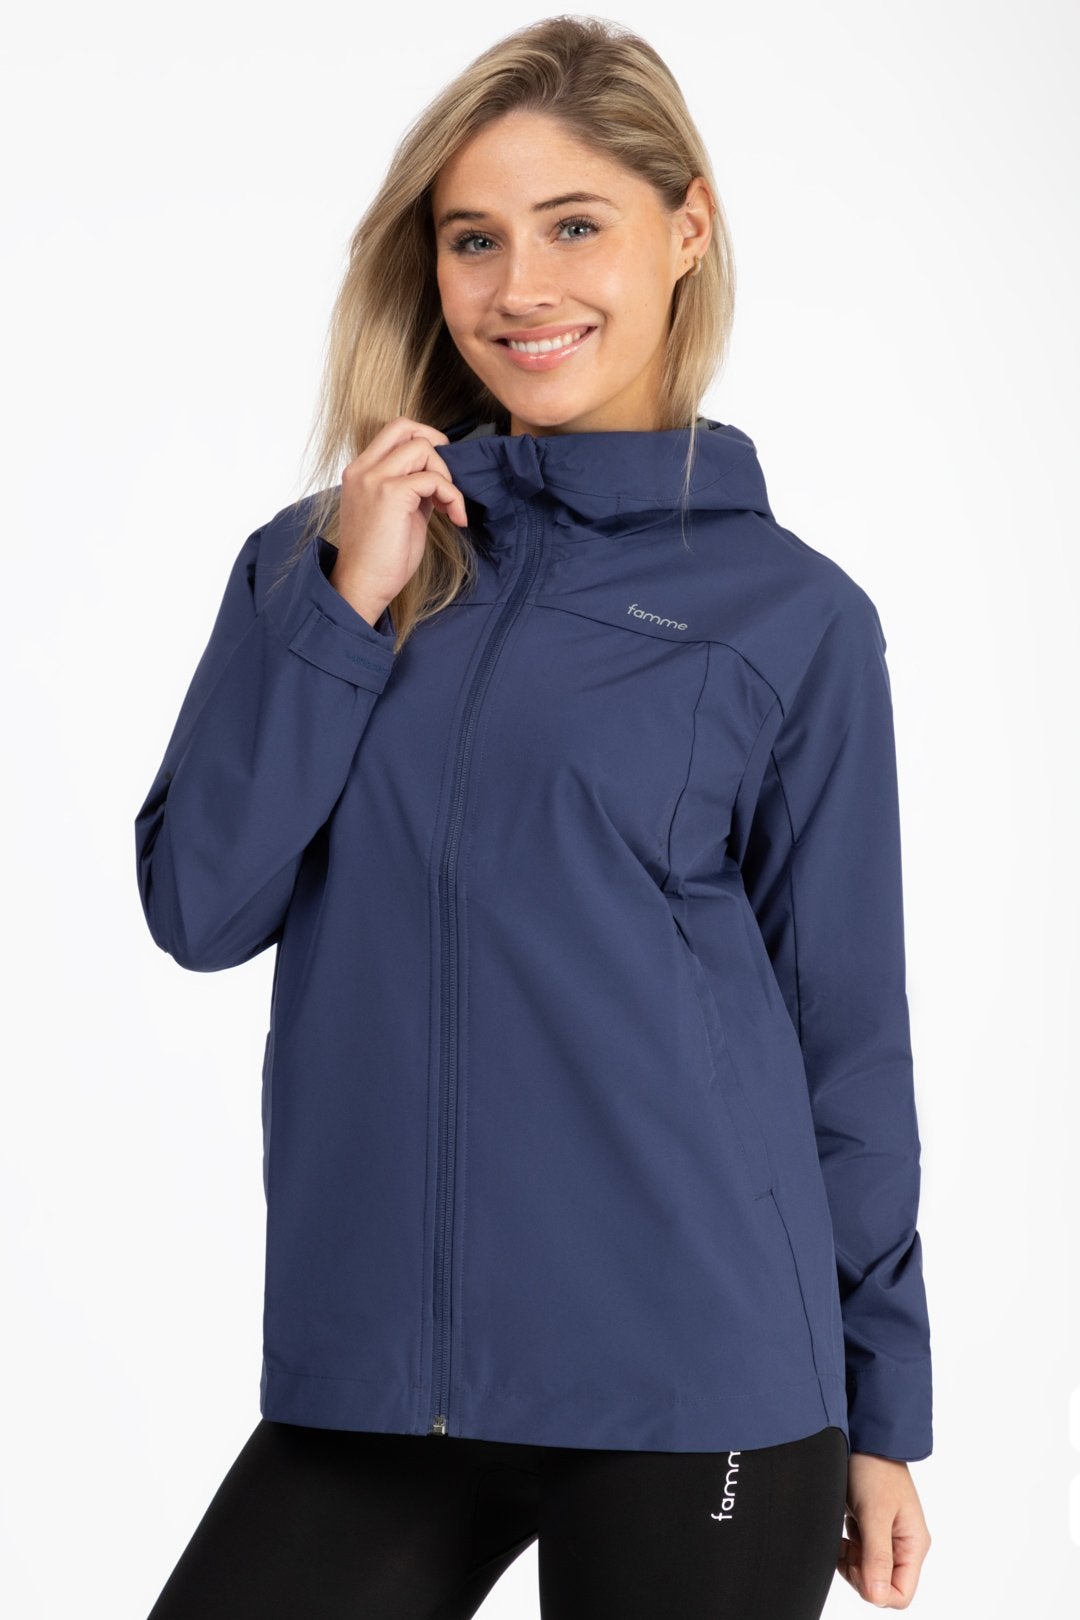 Blue Celine Rain Jacket - for dame - Famme - Rain jacket